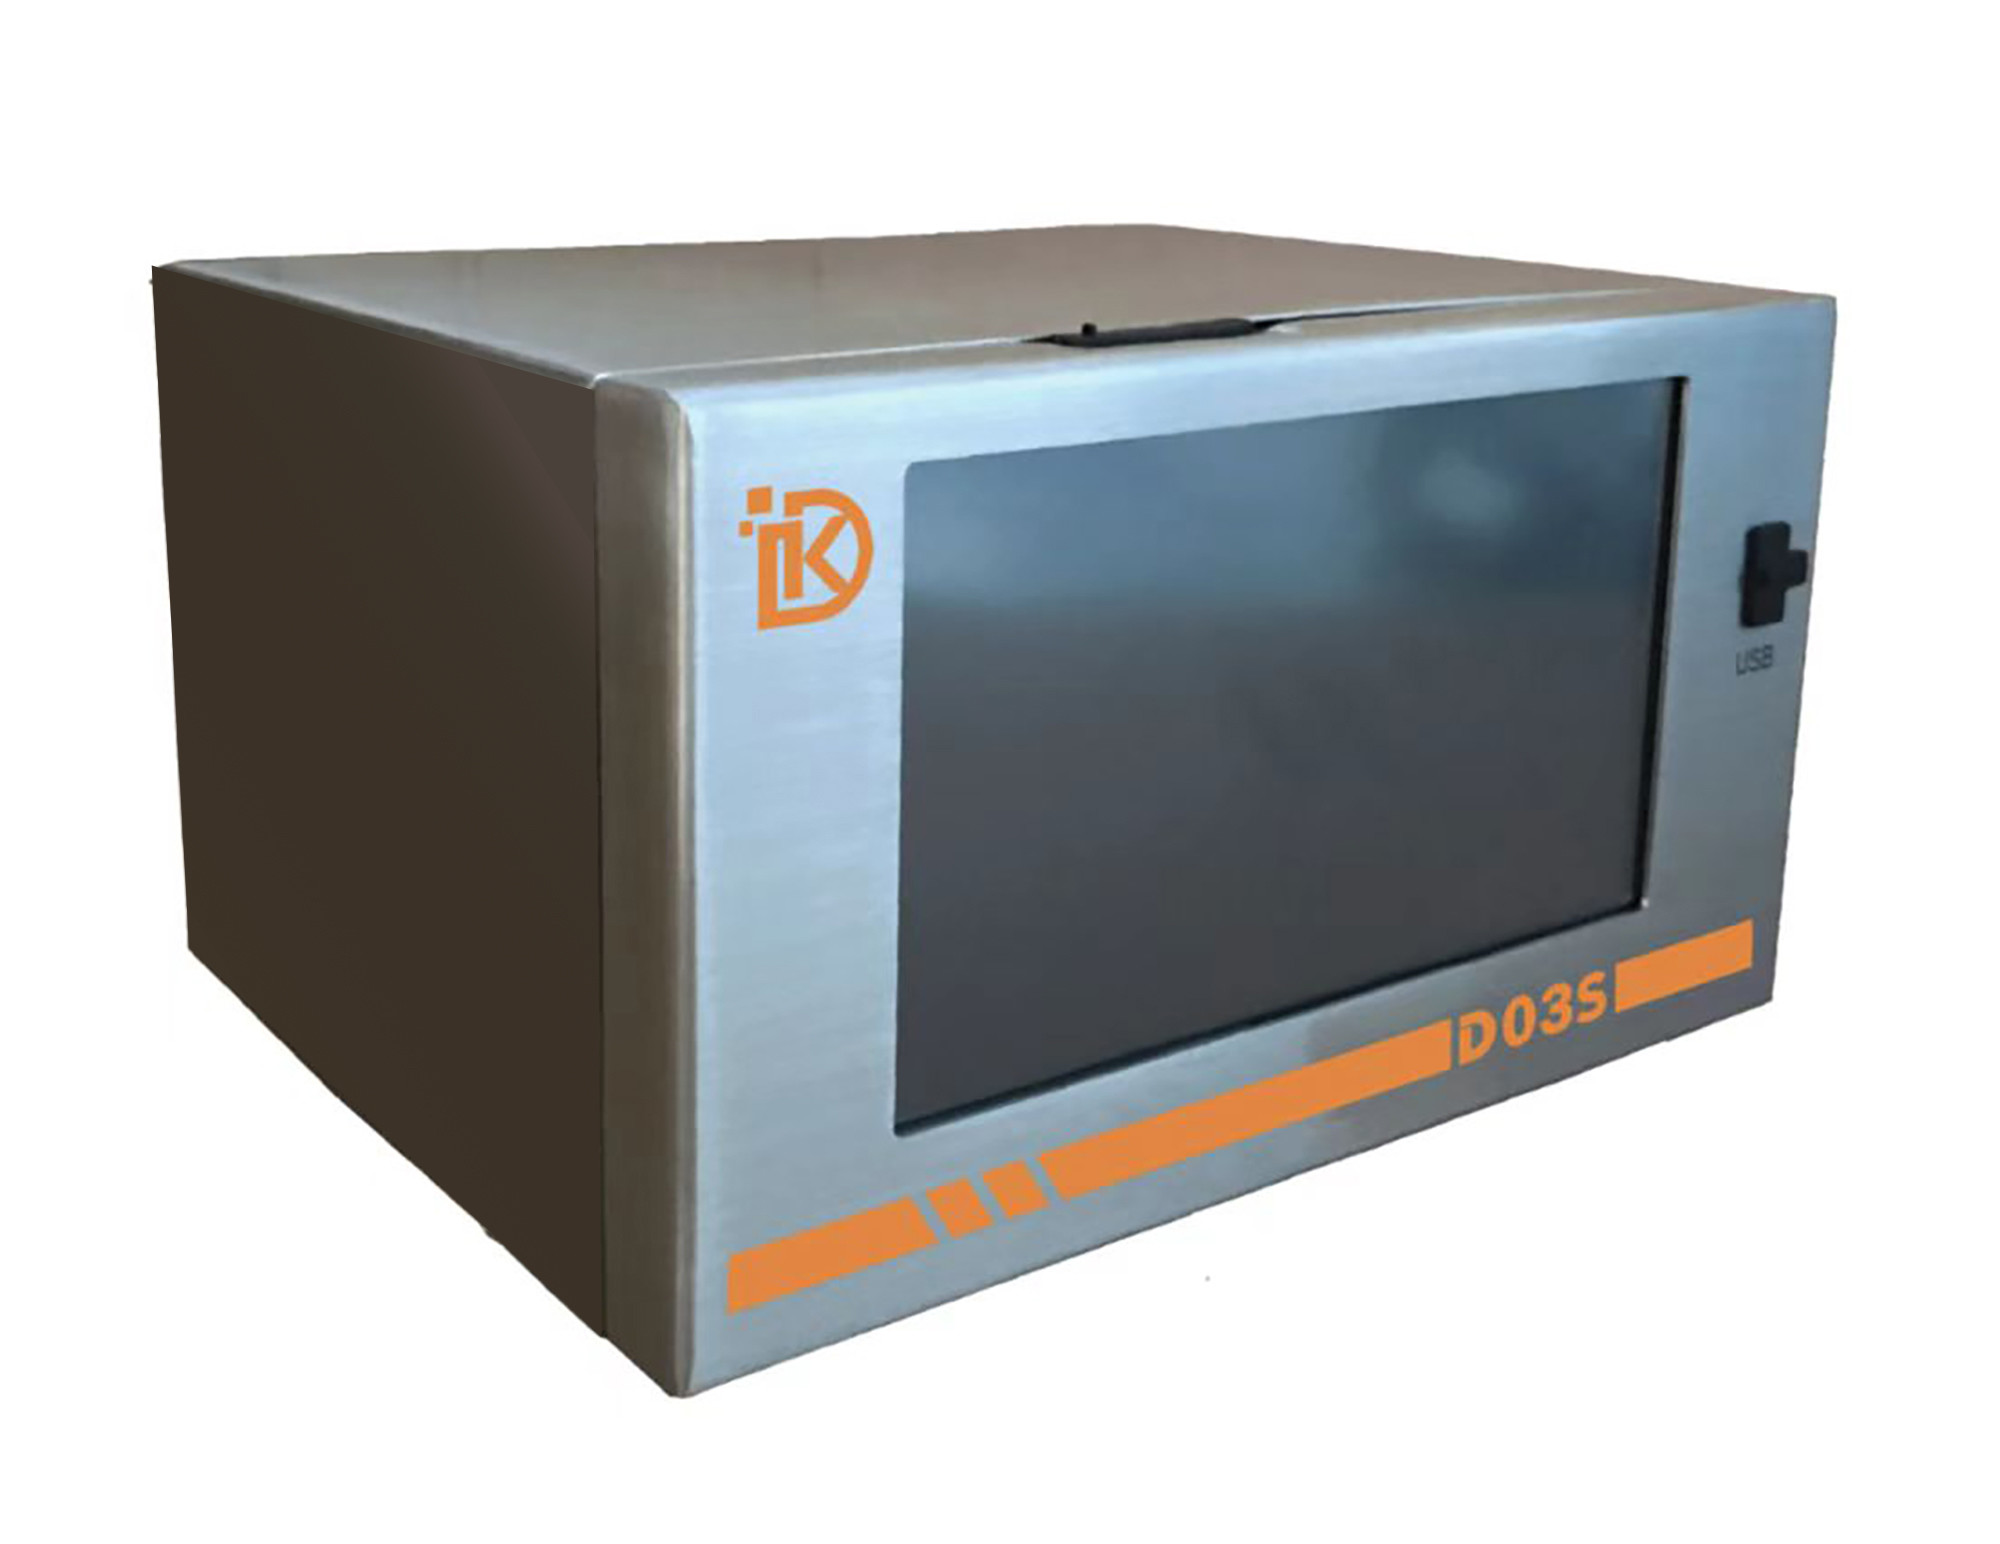 Intermittent Continuous DK D03S Thermal Transfer Overprinter 220V Date Printer Machine 32MM Print Head